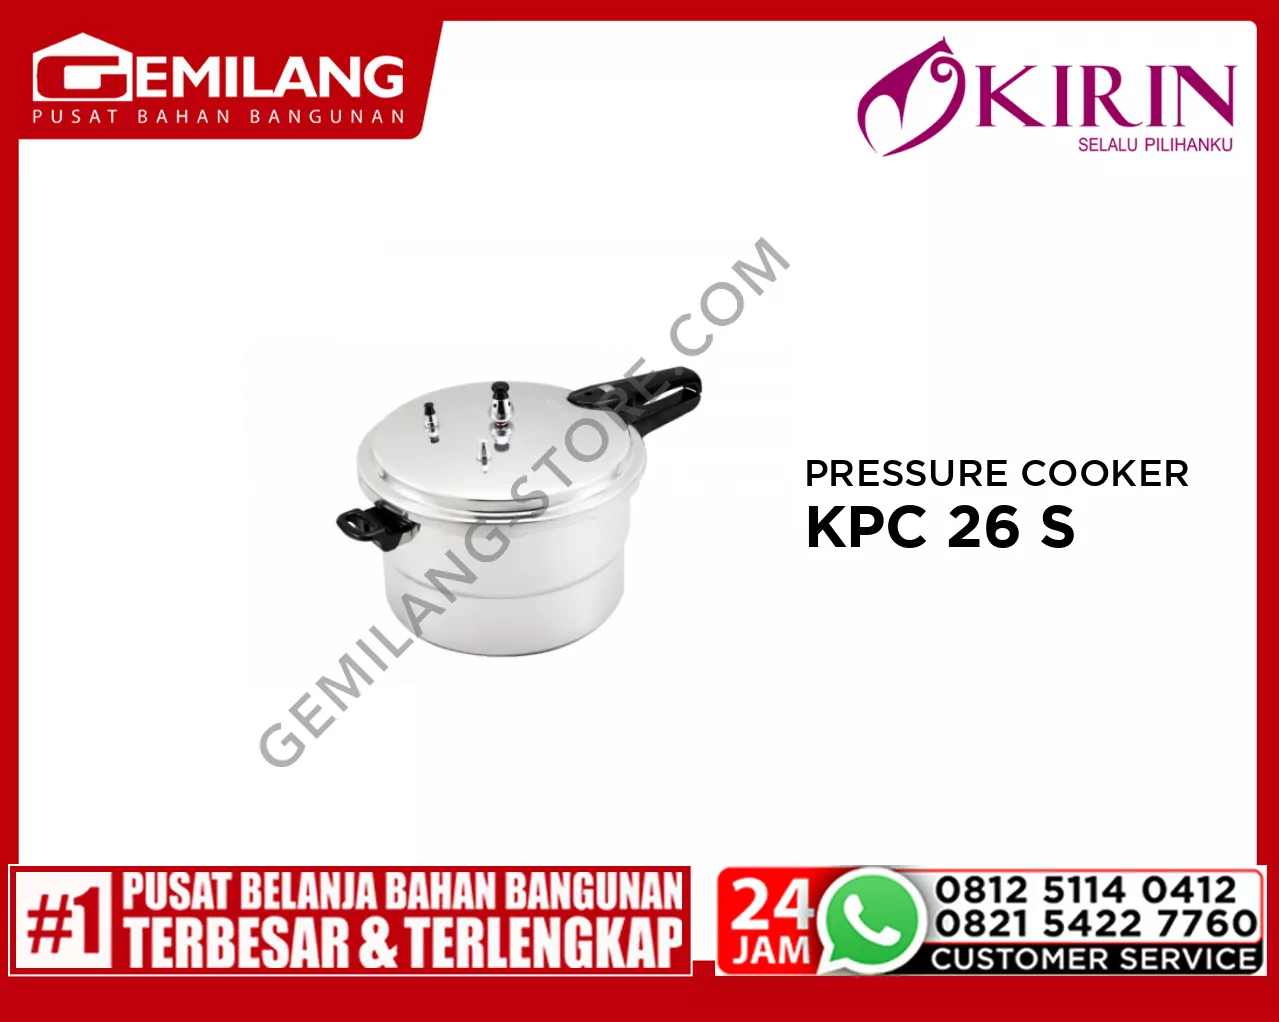 KIRIN PRESSURE COOKER KPC 26 S